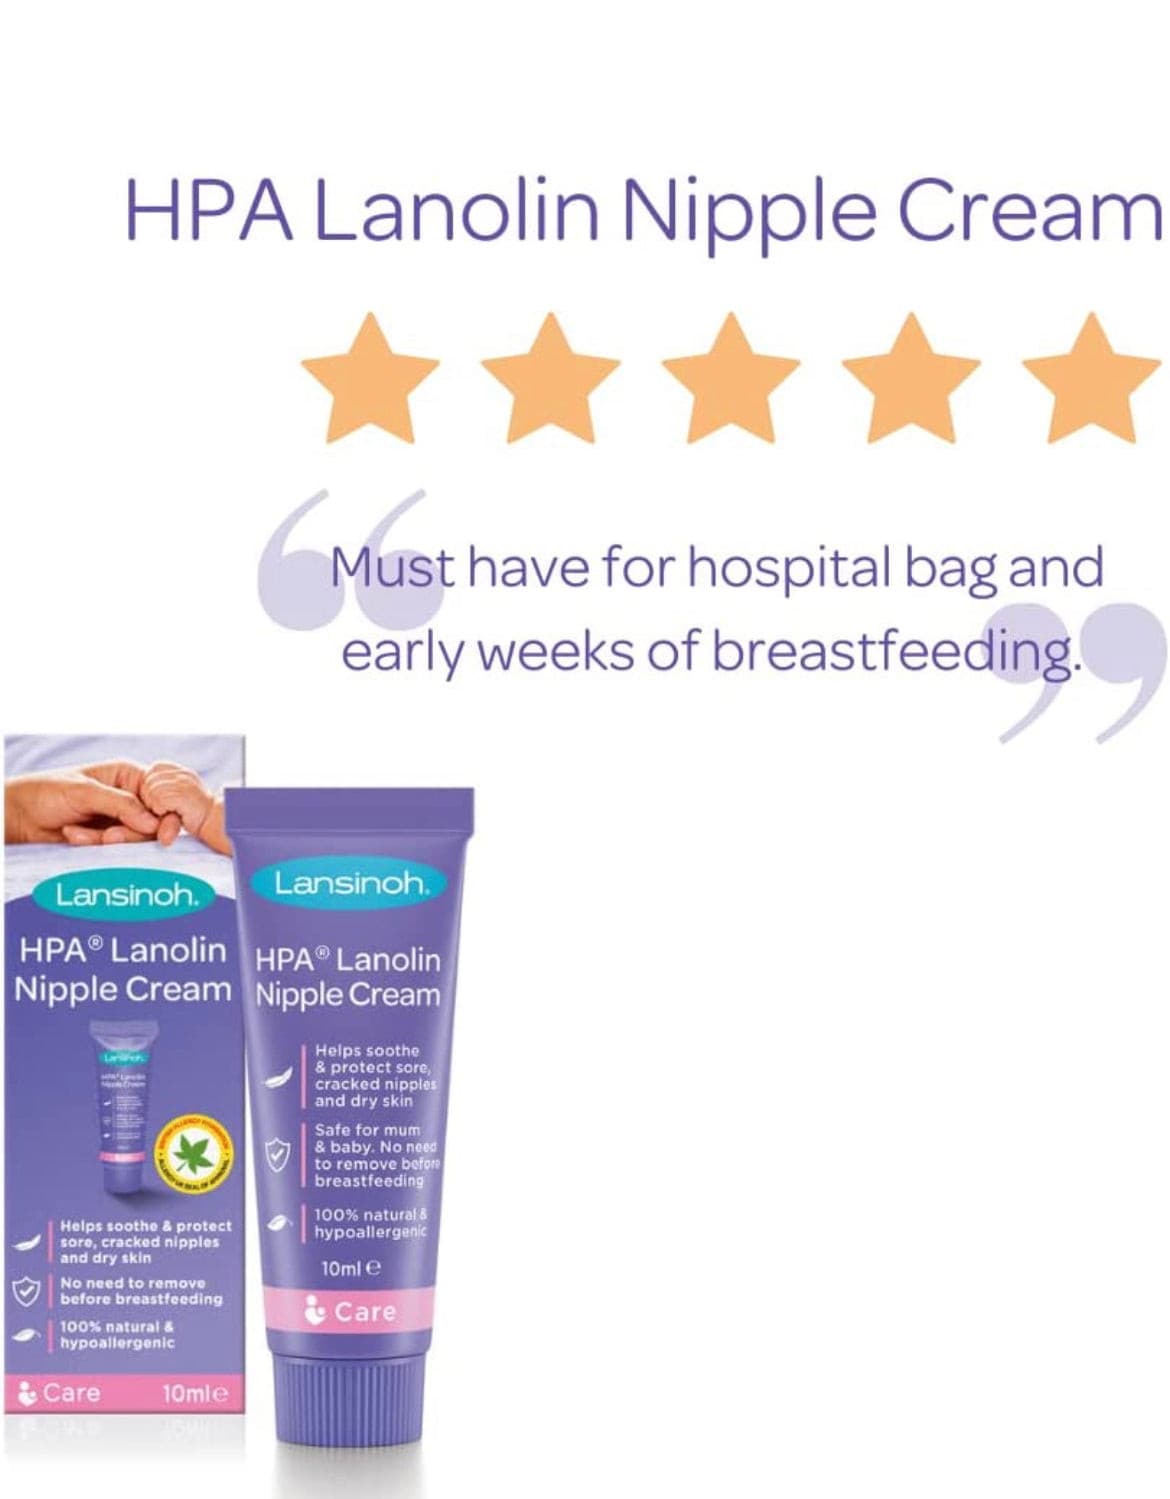 Lansinoh HPA Lanolin Nipple Cream for Sore Nipple 10ml.